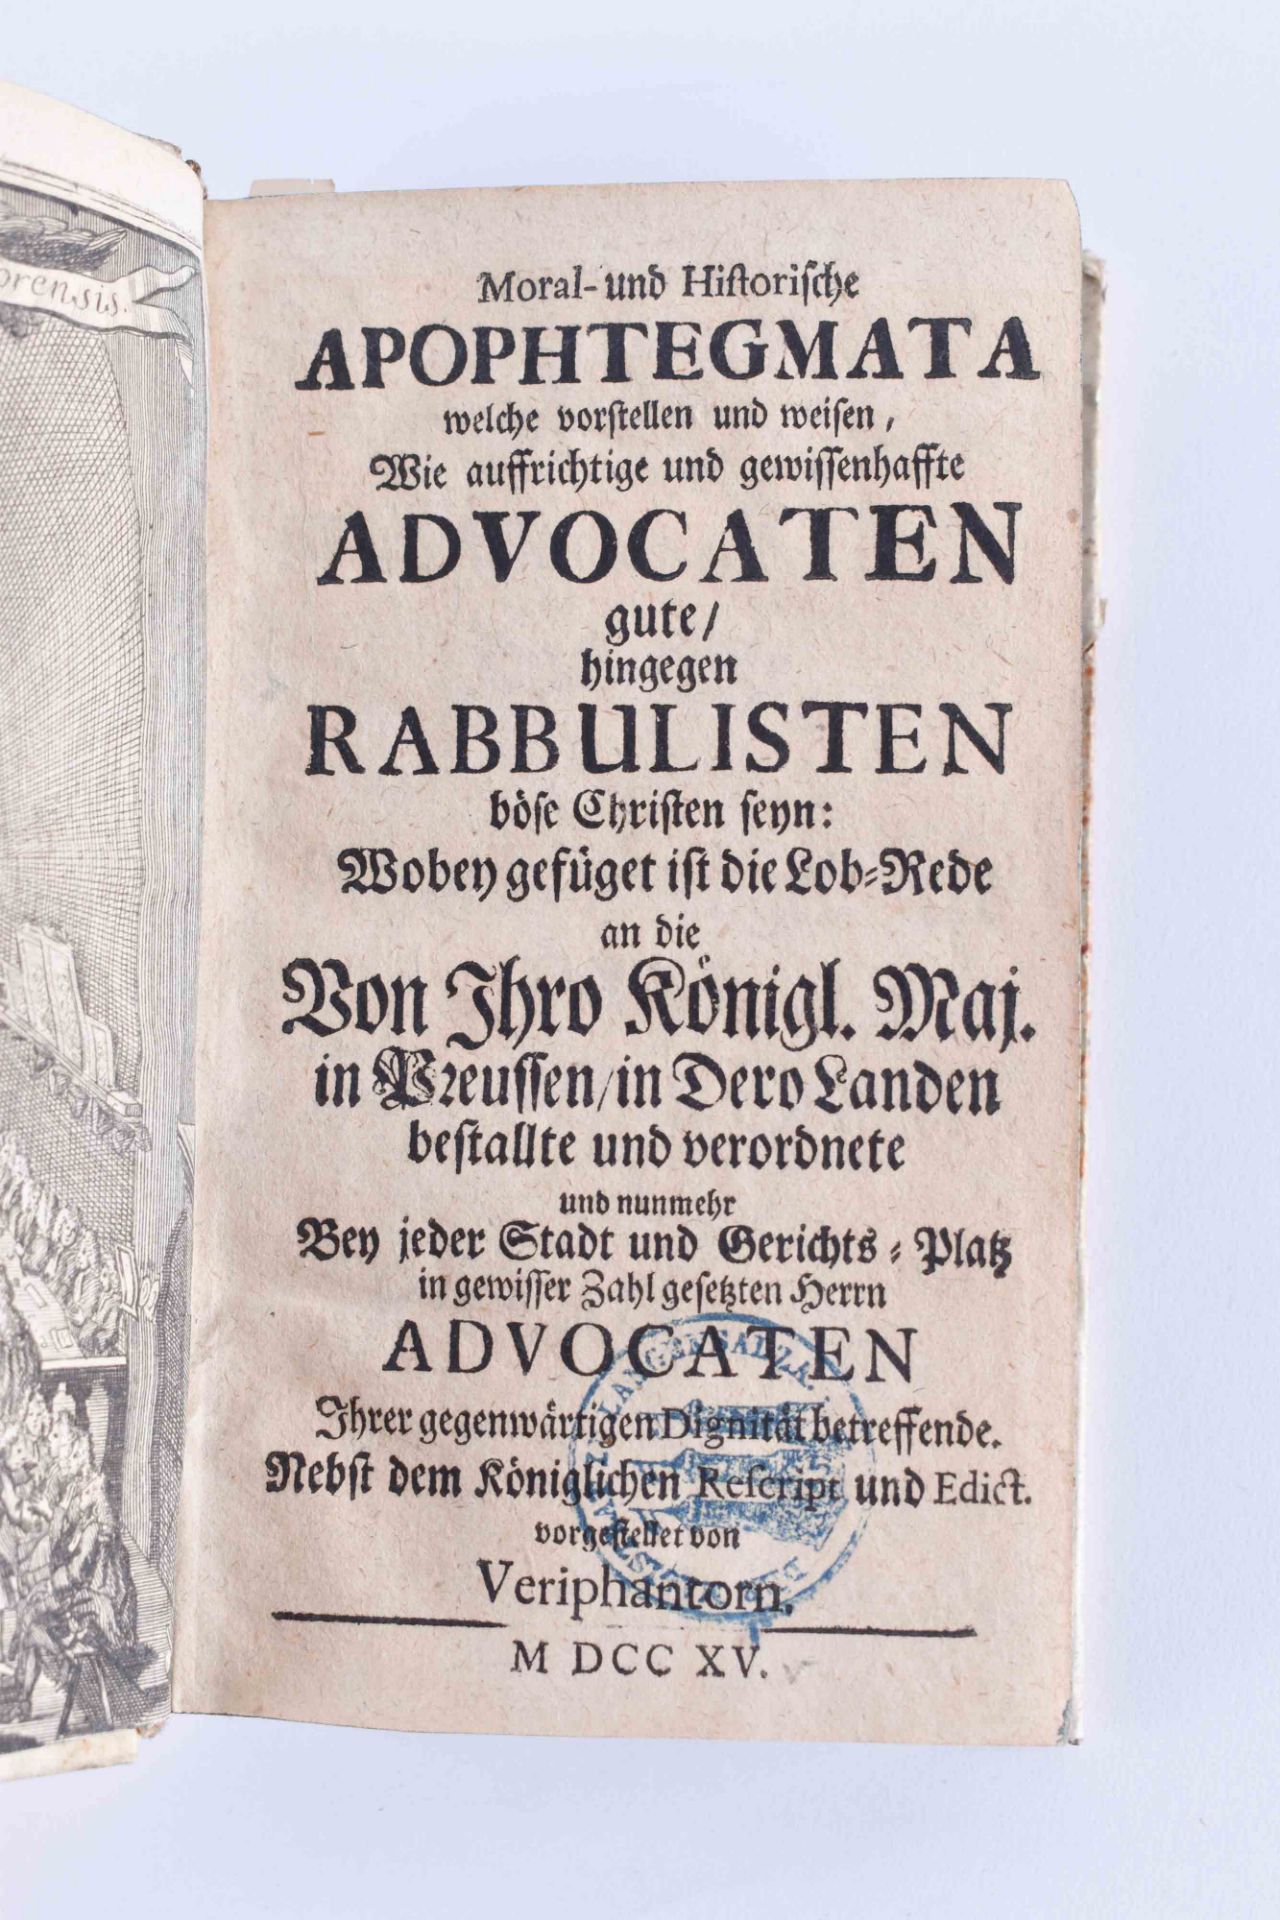 Aphotegmarta - Advocaten Der raisonirende Jurist 1714 - Image 3 of 5